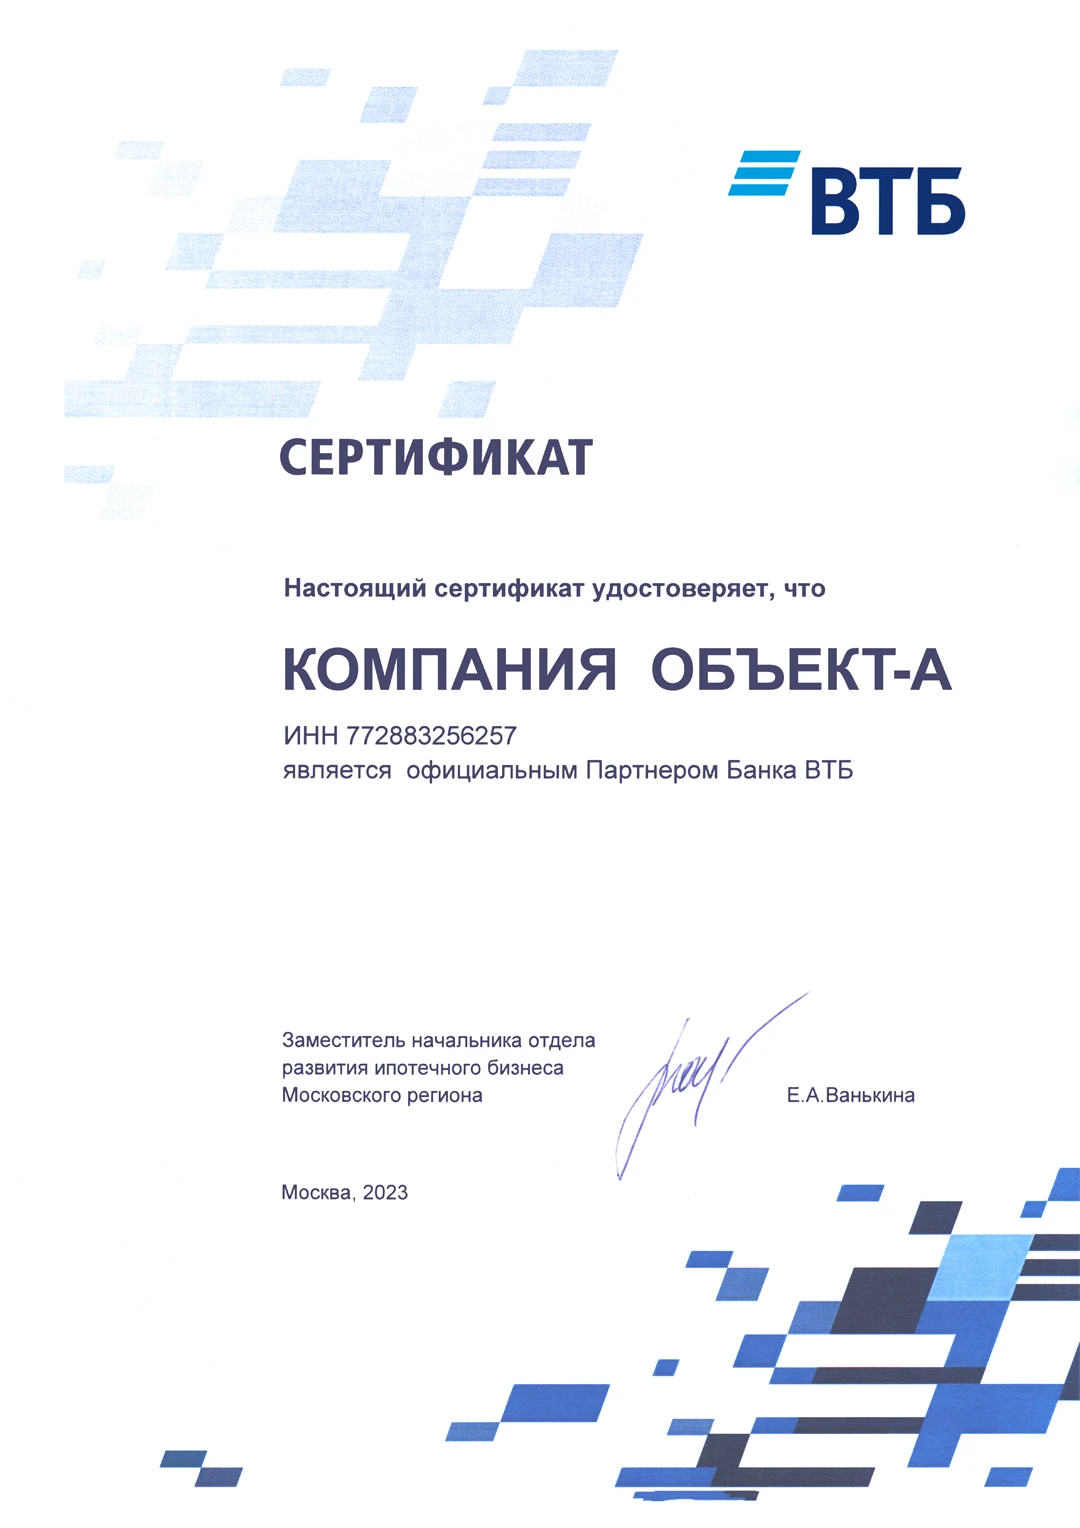 Сертификат банка ВТБ